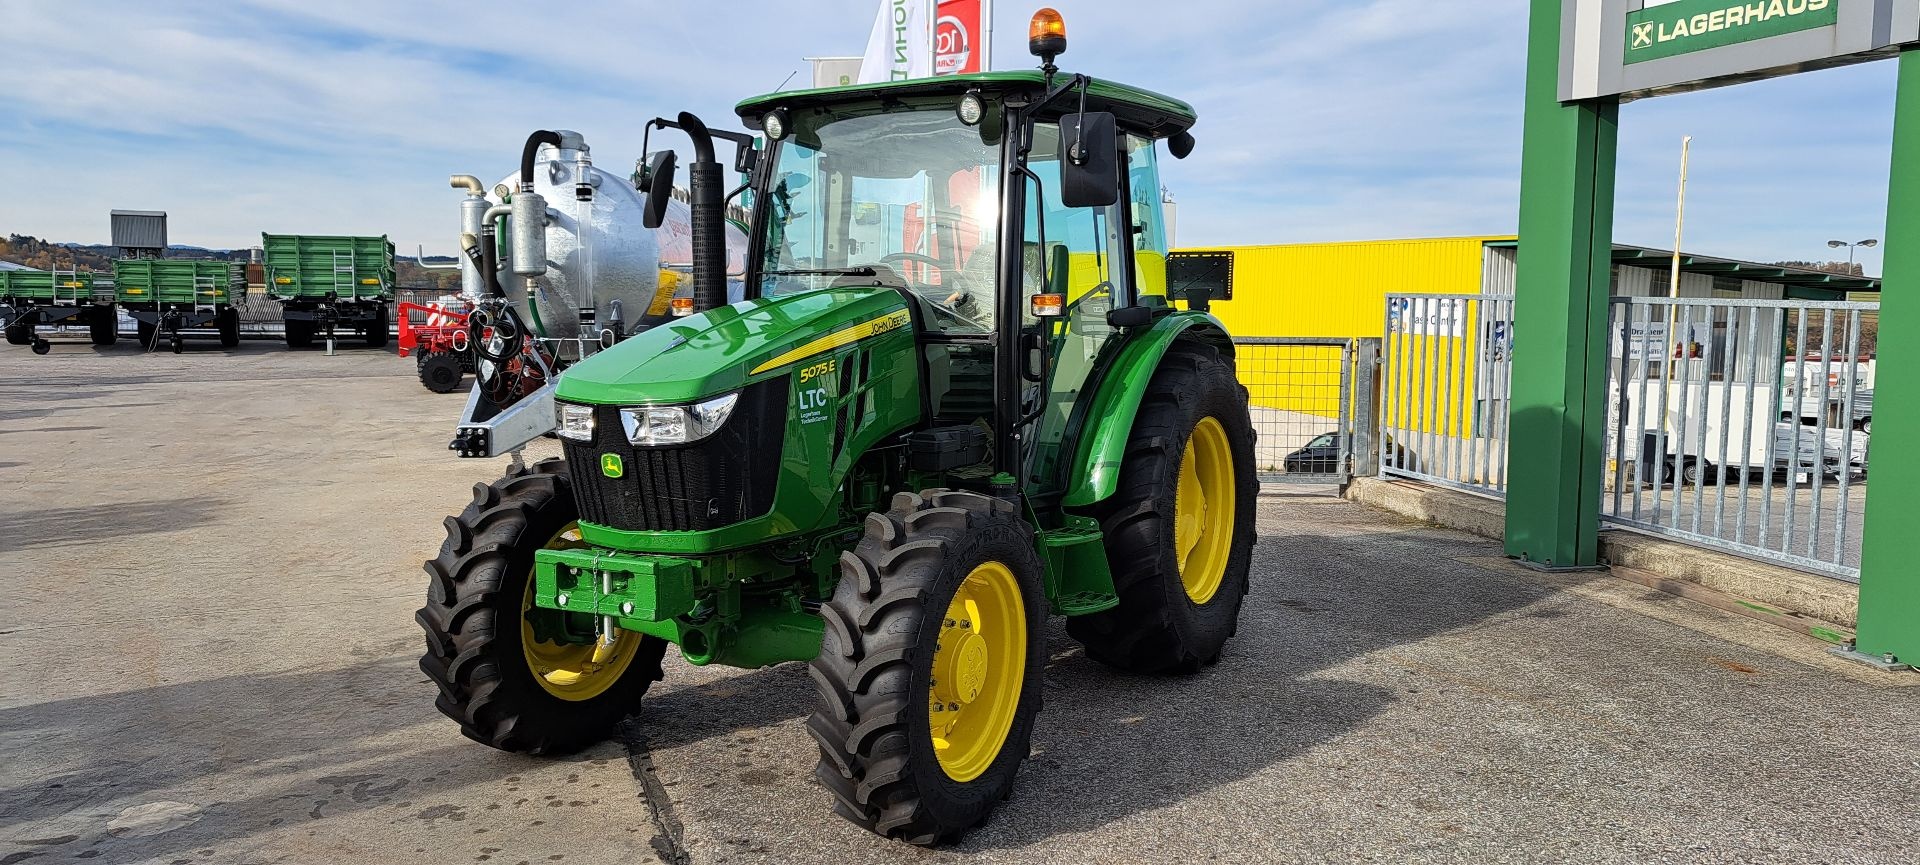 John Deere 5075 E tractor €43,742